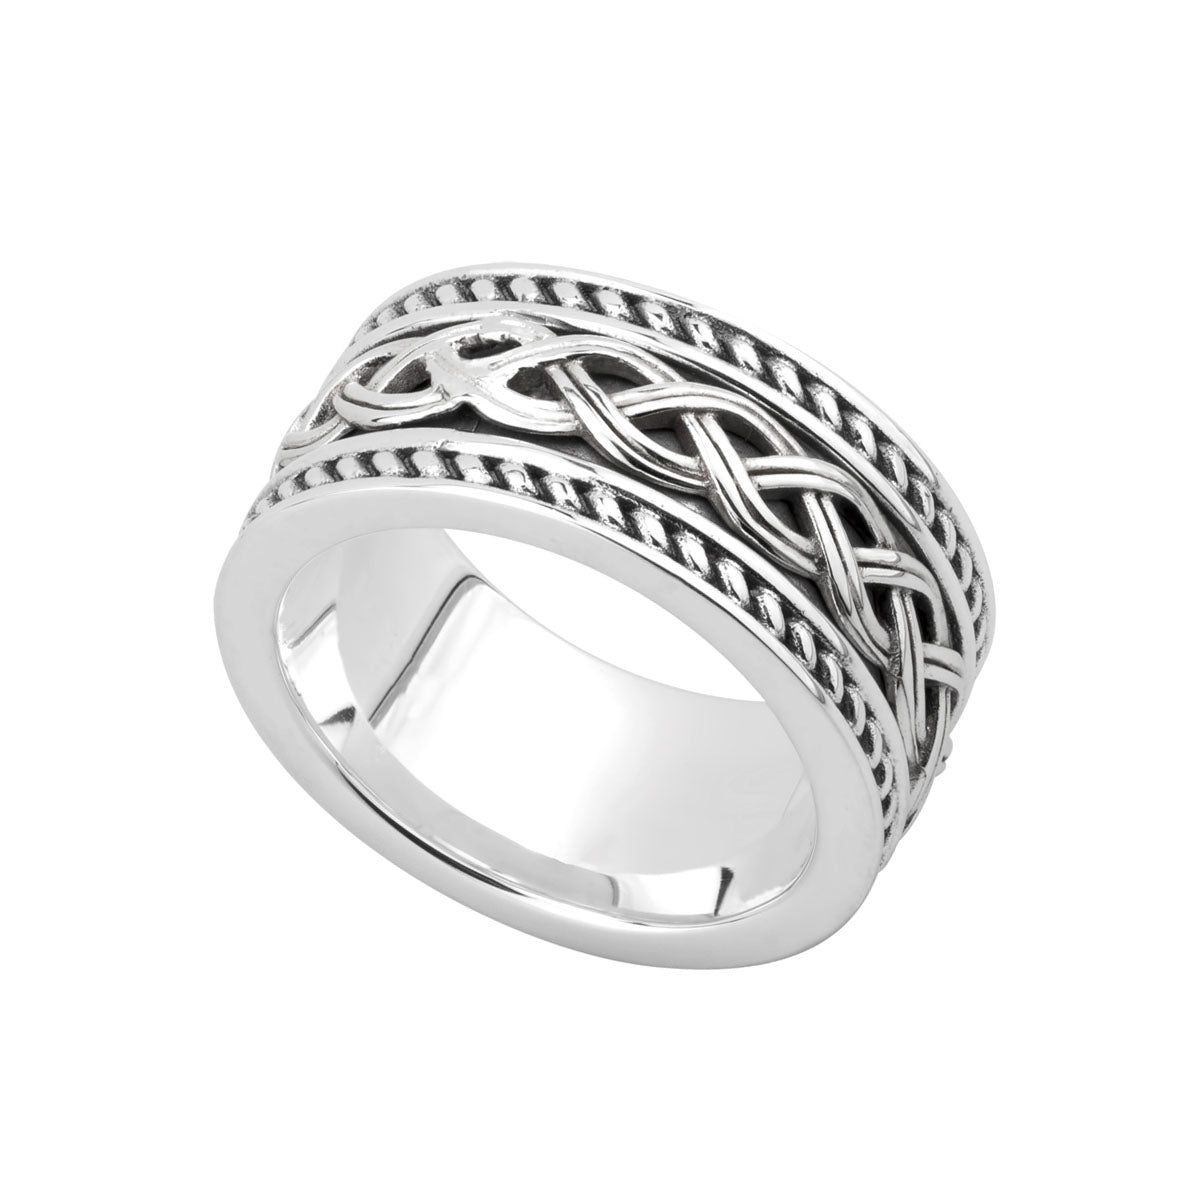 mens sterling silver celtic knot ring s21048 from Solvar